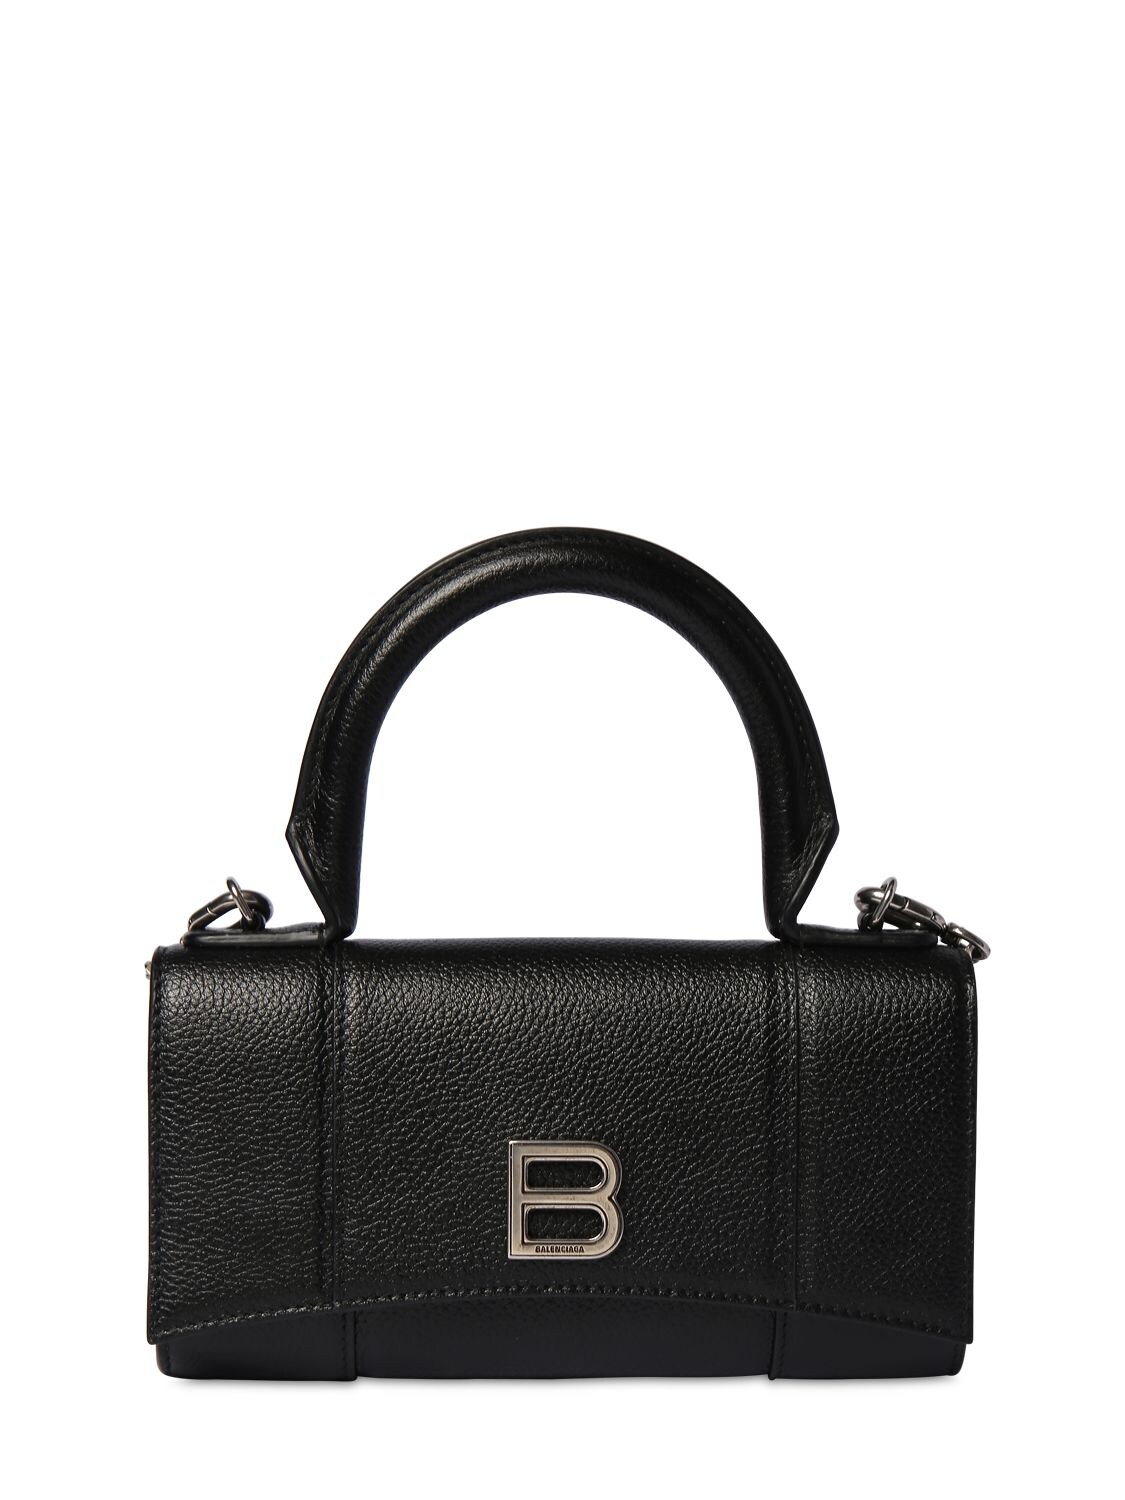 Balenciaga Hourg Leather Phone Holder In Black